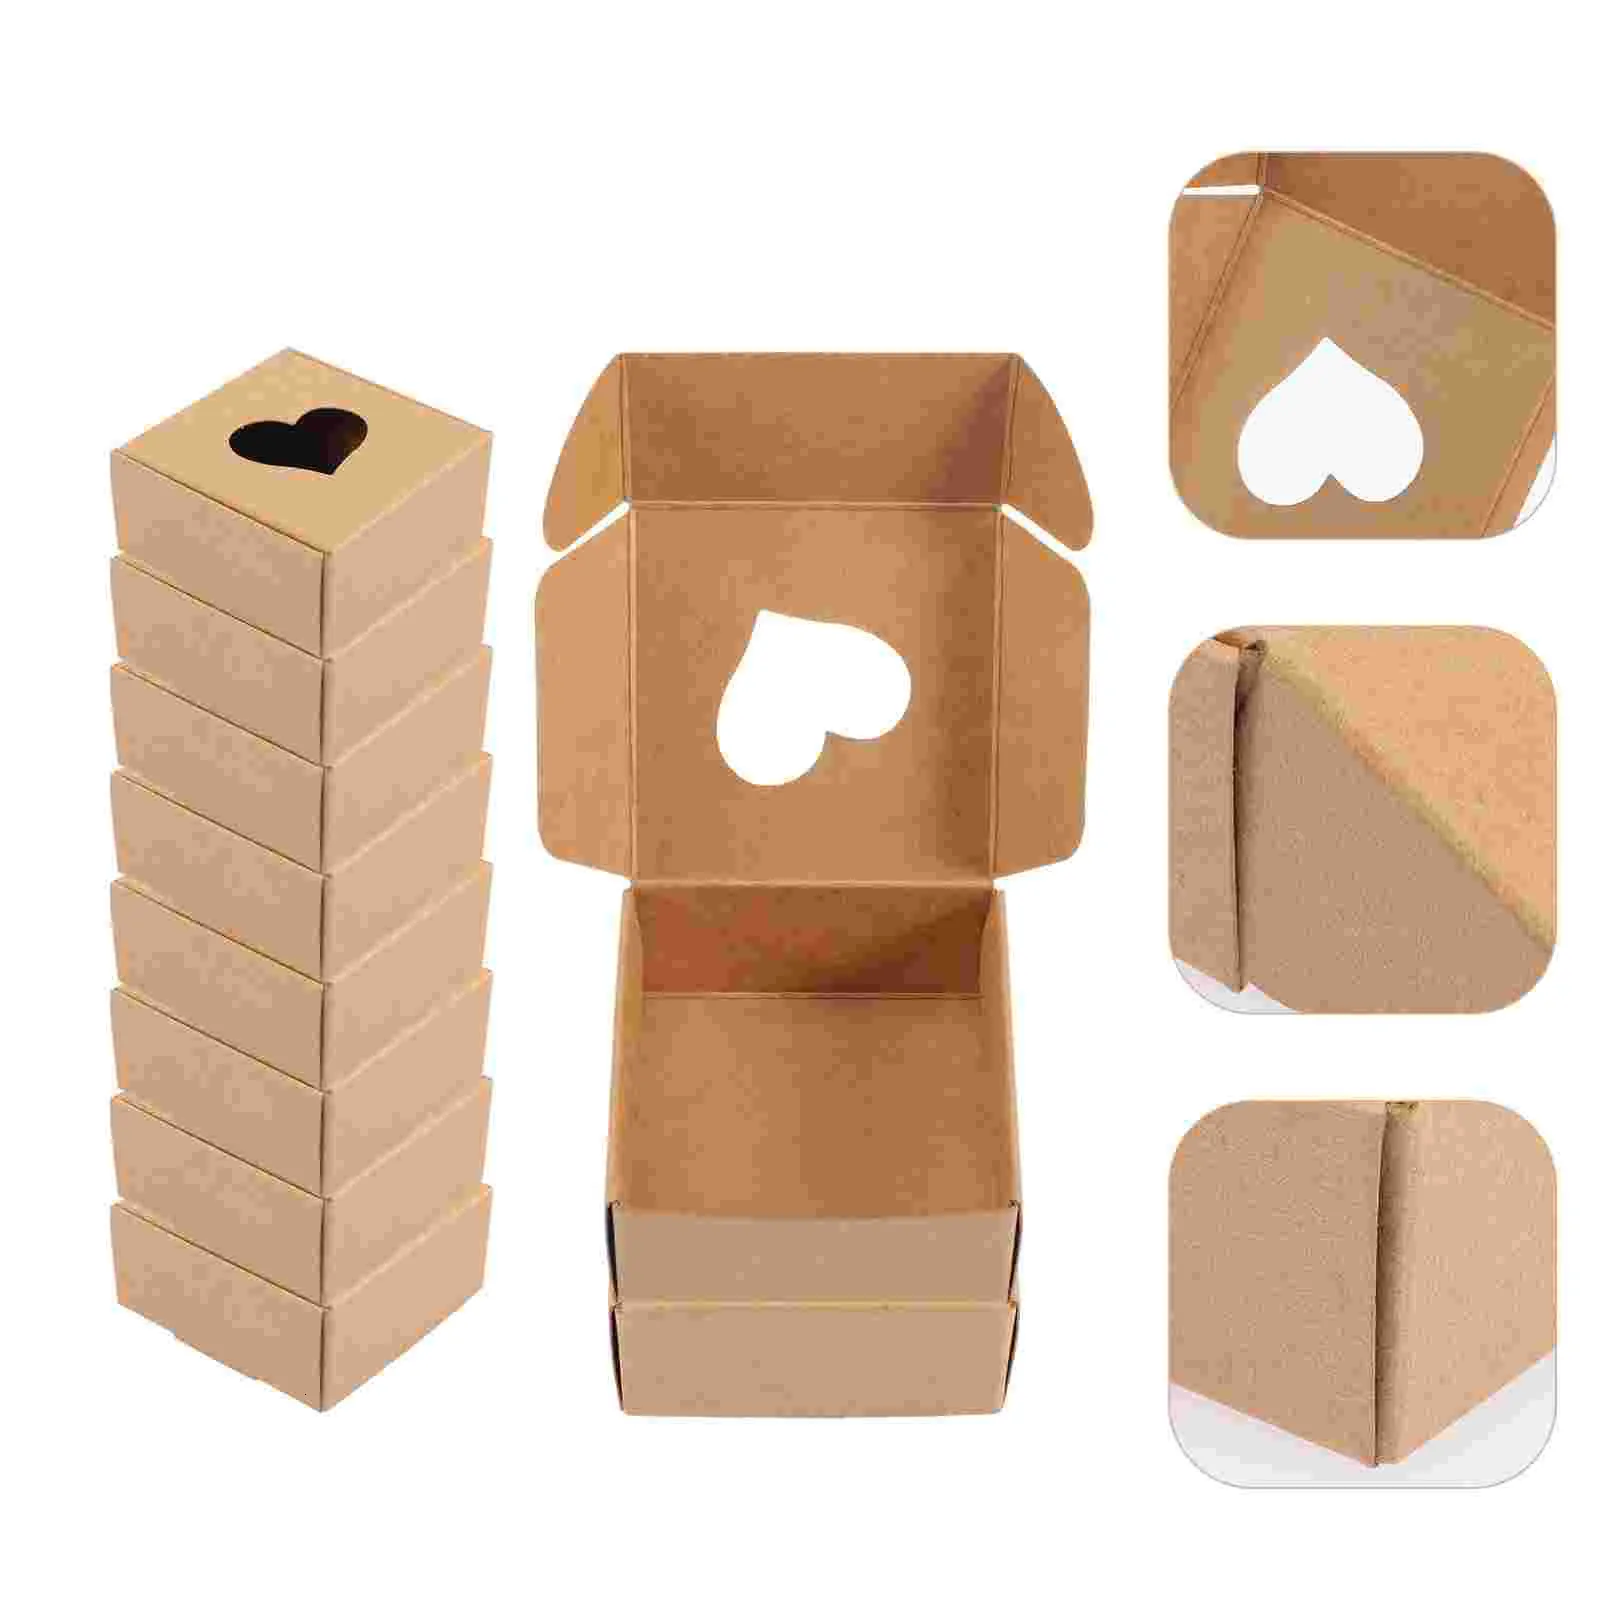 Caja de regalo de cartón rosa 20 x 20 x 10 cm - Comprar cajas